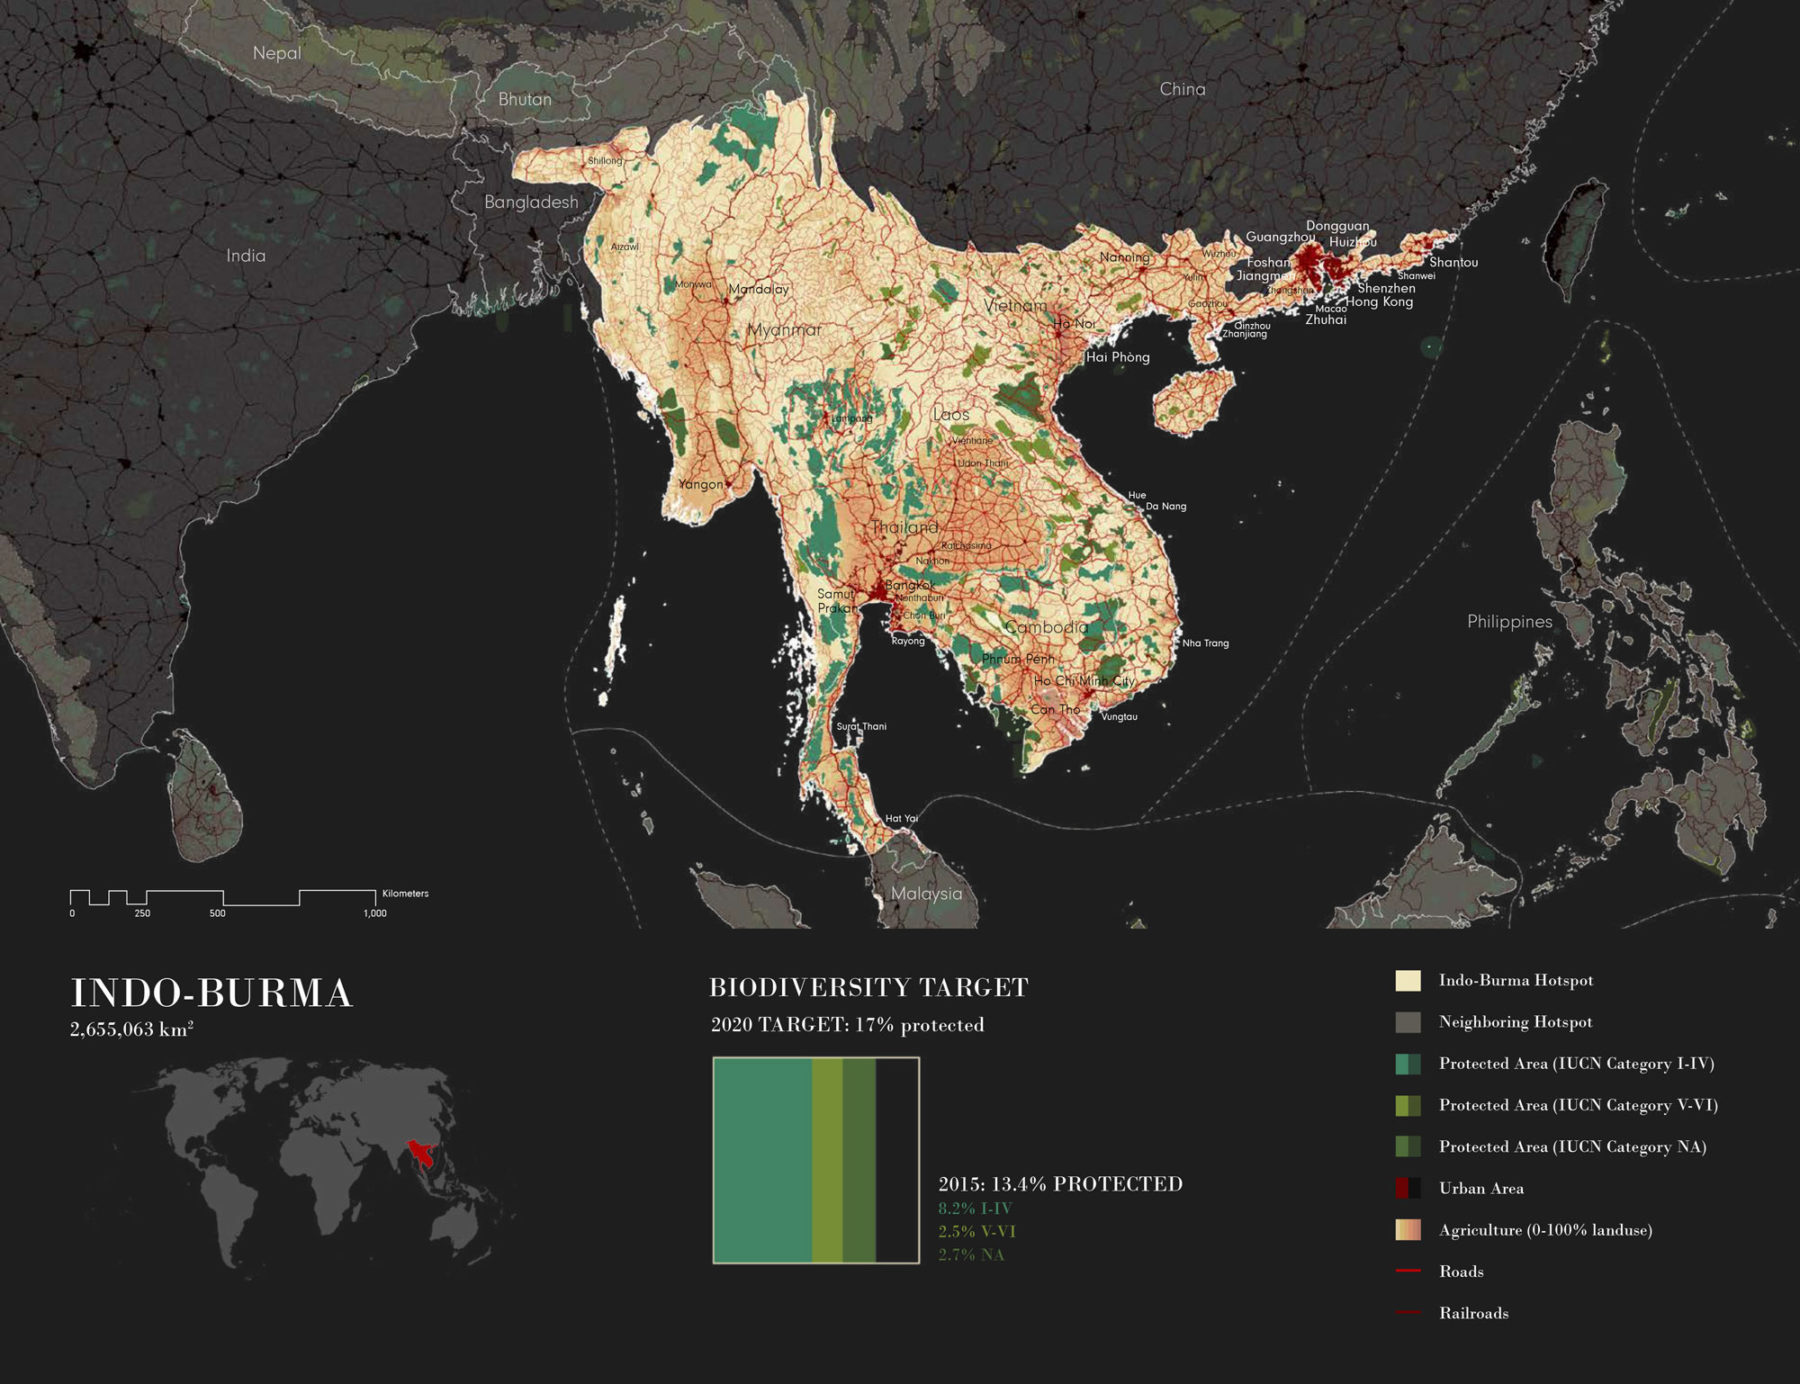 a map of biodiversity hotspots in the Indo-Burma ecoregion